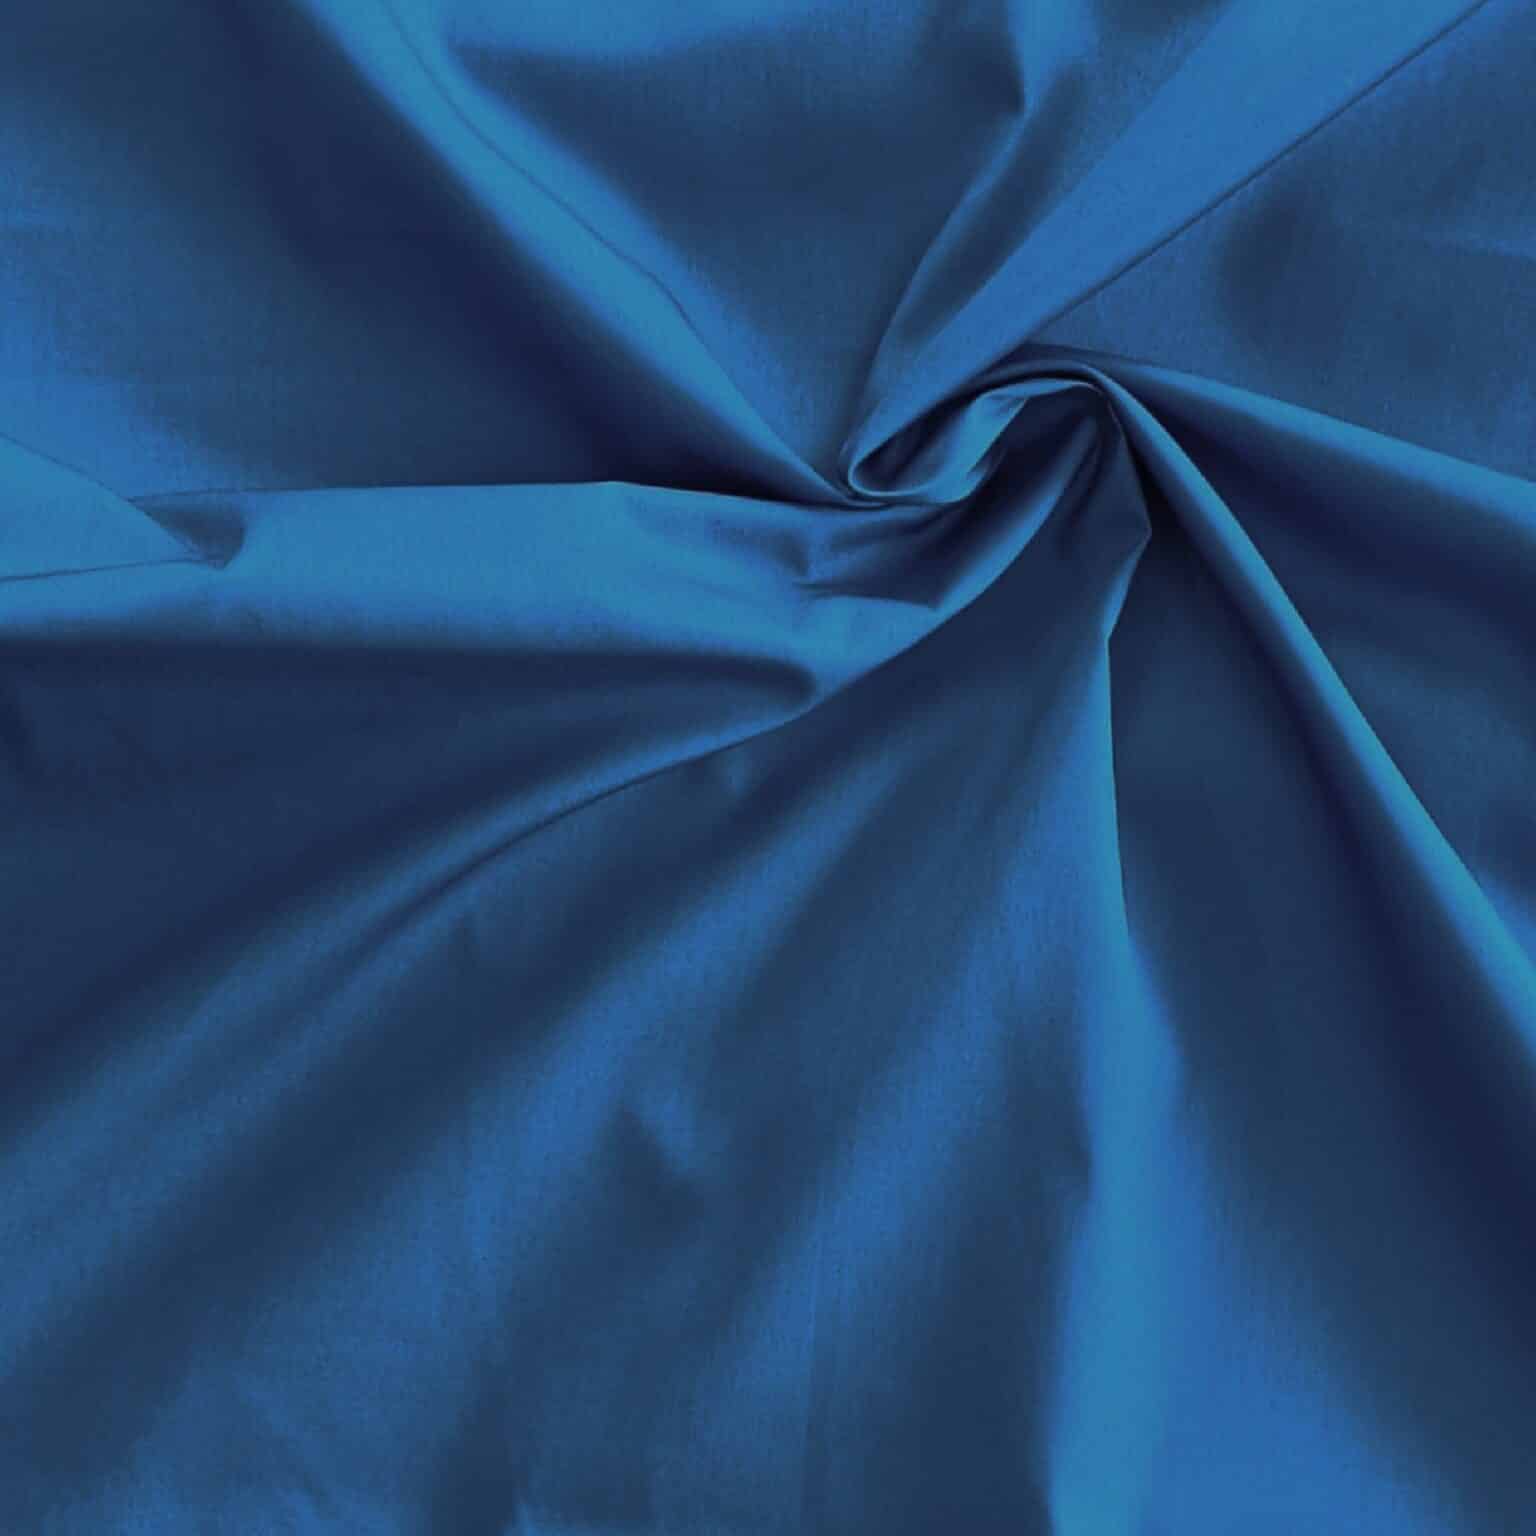 royak blue plain cotton poplin fabric | More Sewing